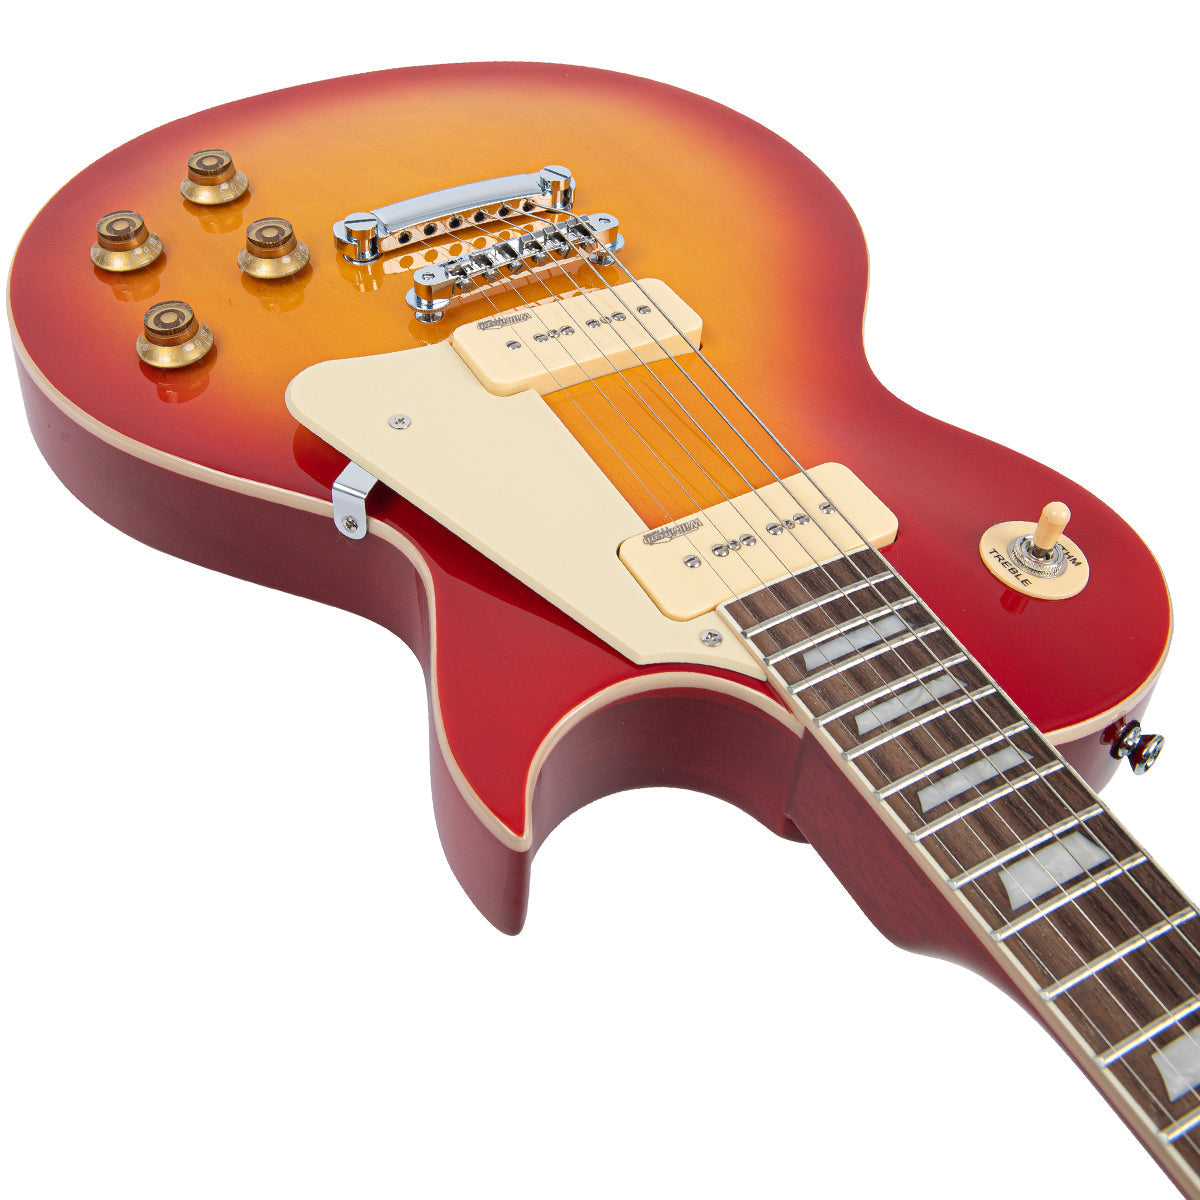 Vintage V100P ReIssued Electric Guitar ~ Cherry Sunburst, Electric Guitar for sale at Richards Guitars.